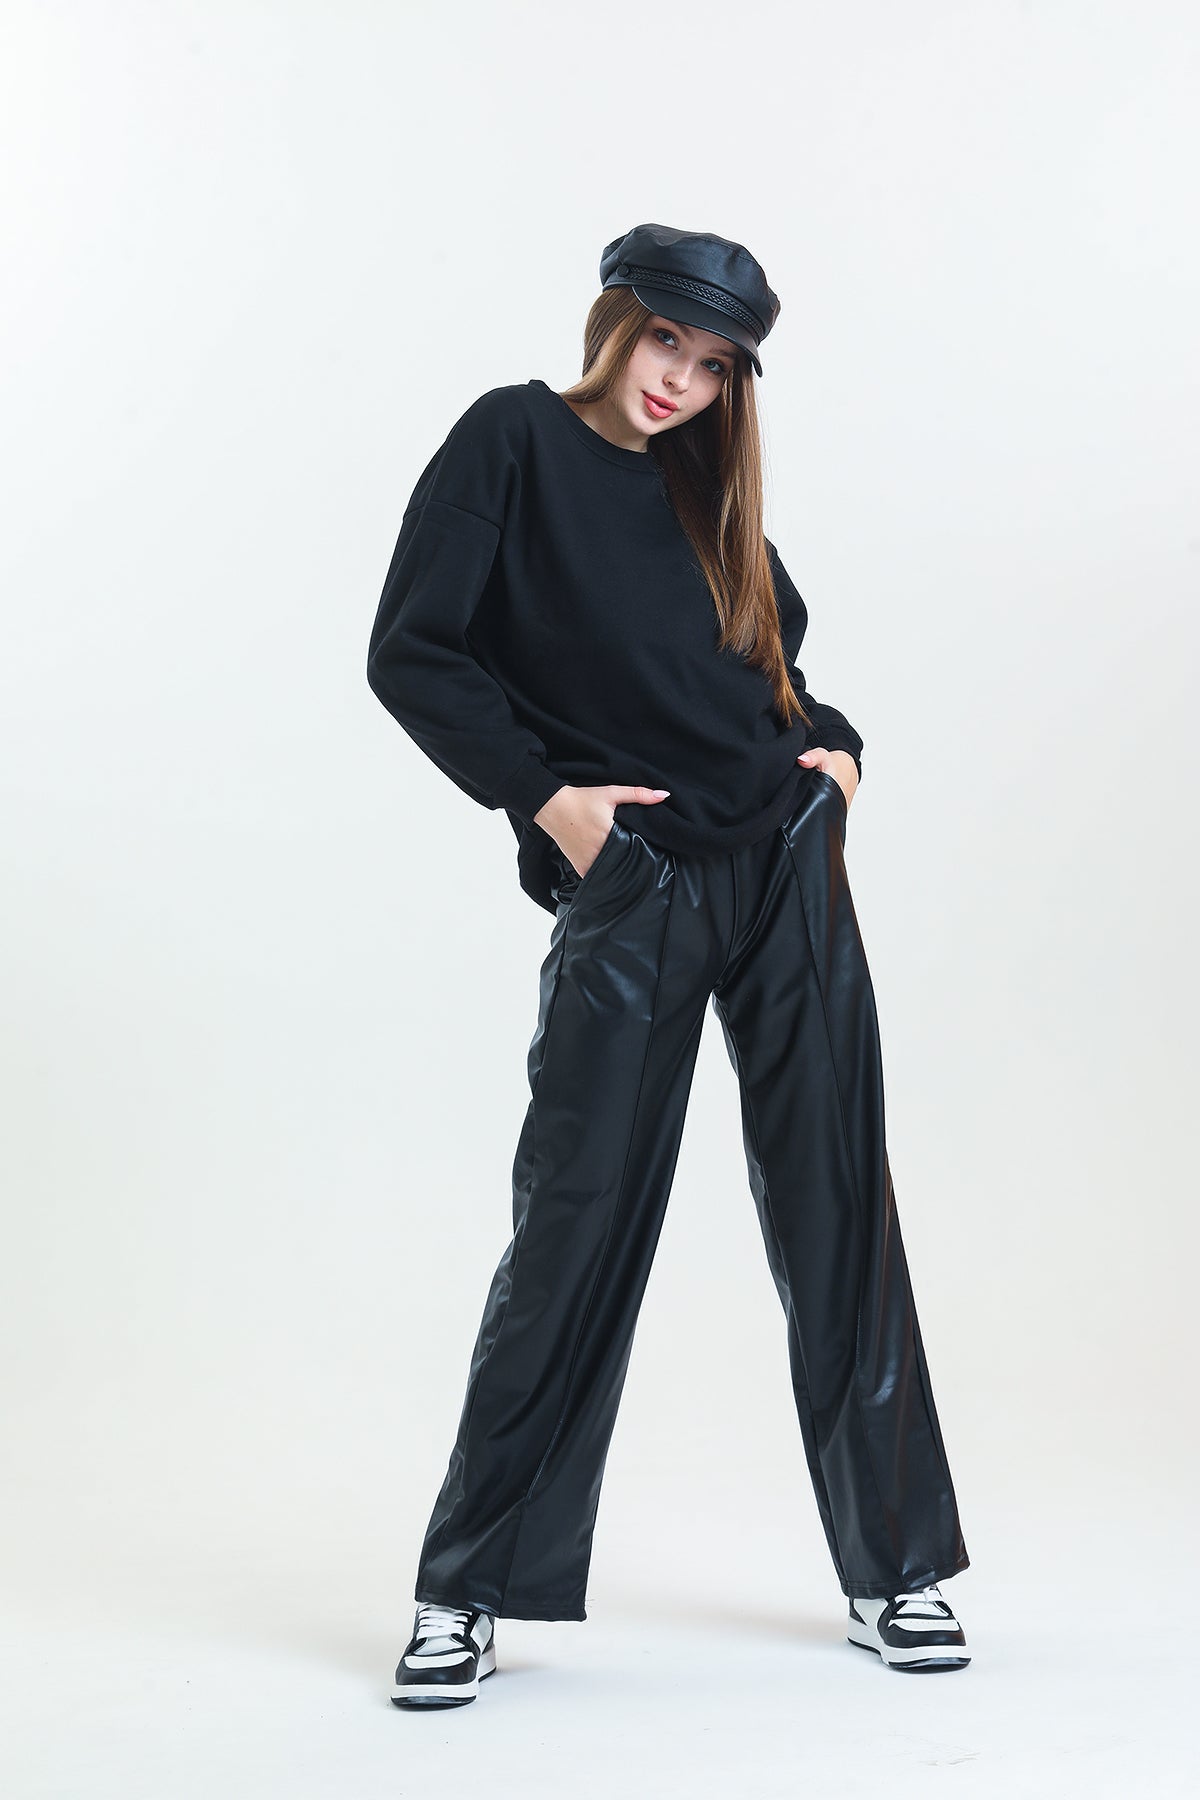 Black Spanish trotter ribbon Ironing track, waist krotea rubber artificial leather women pants